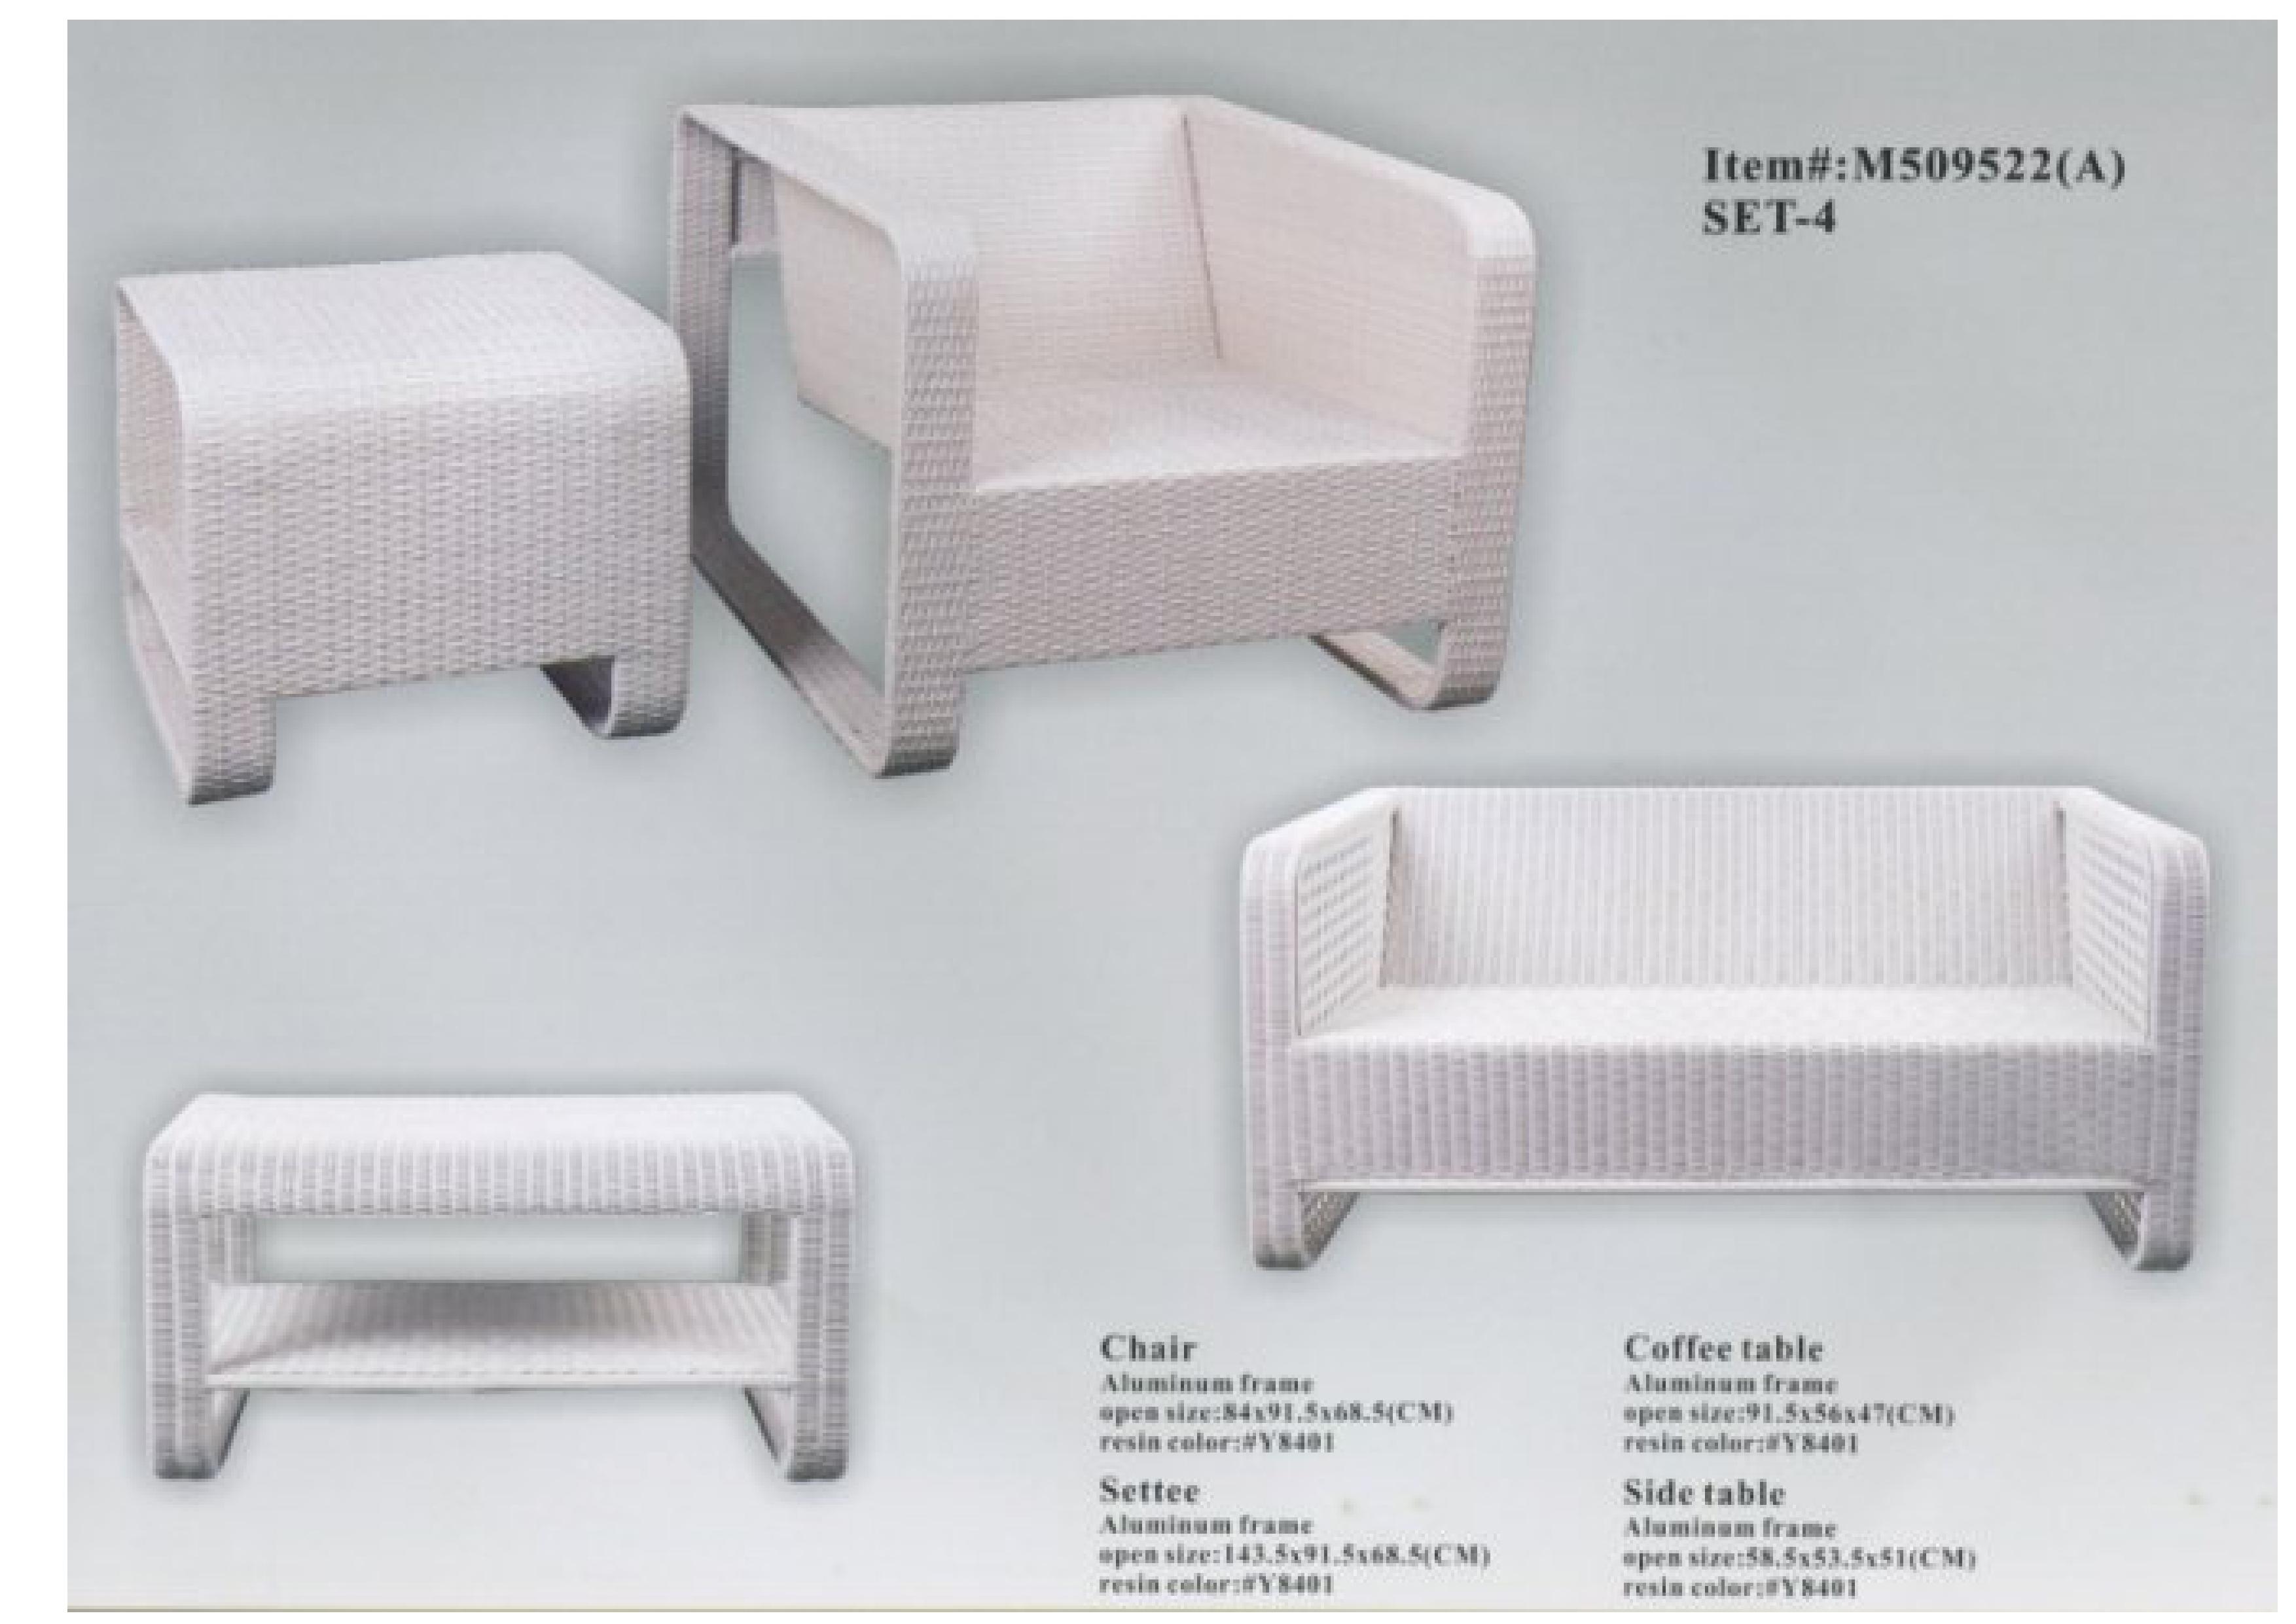 proimages/1.FNT-112 Rattan Furniture Catalogue_11.jpg